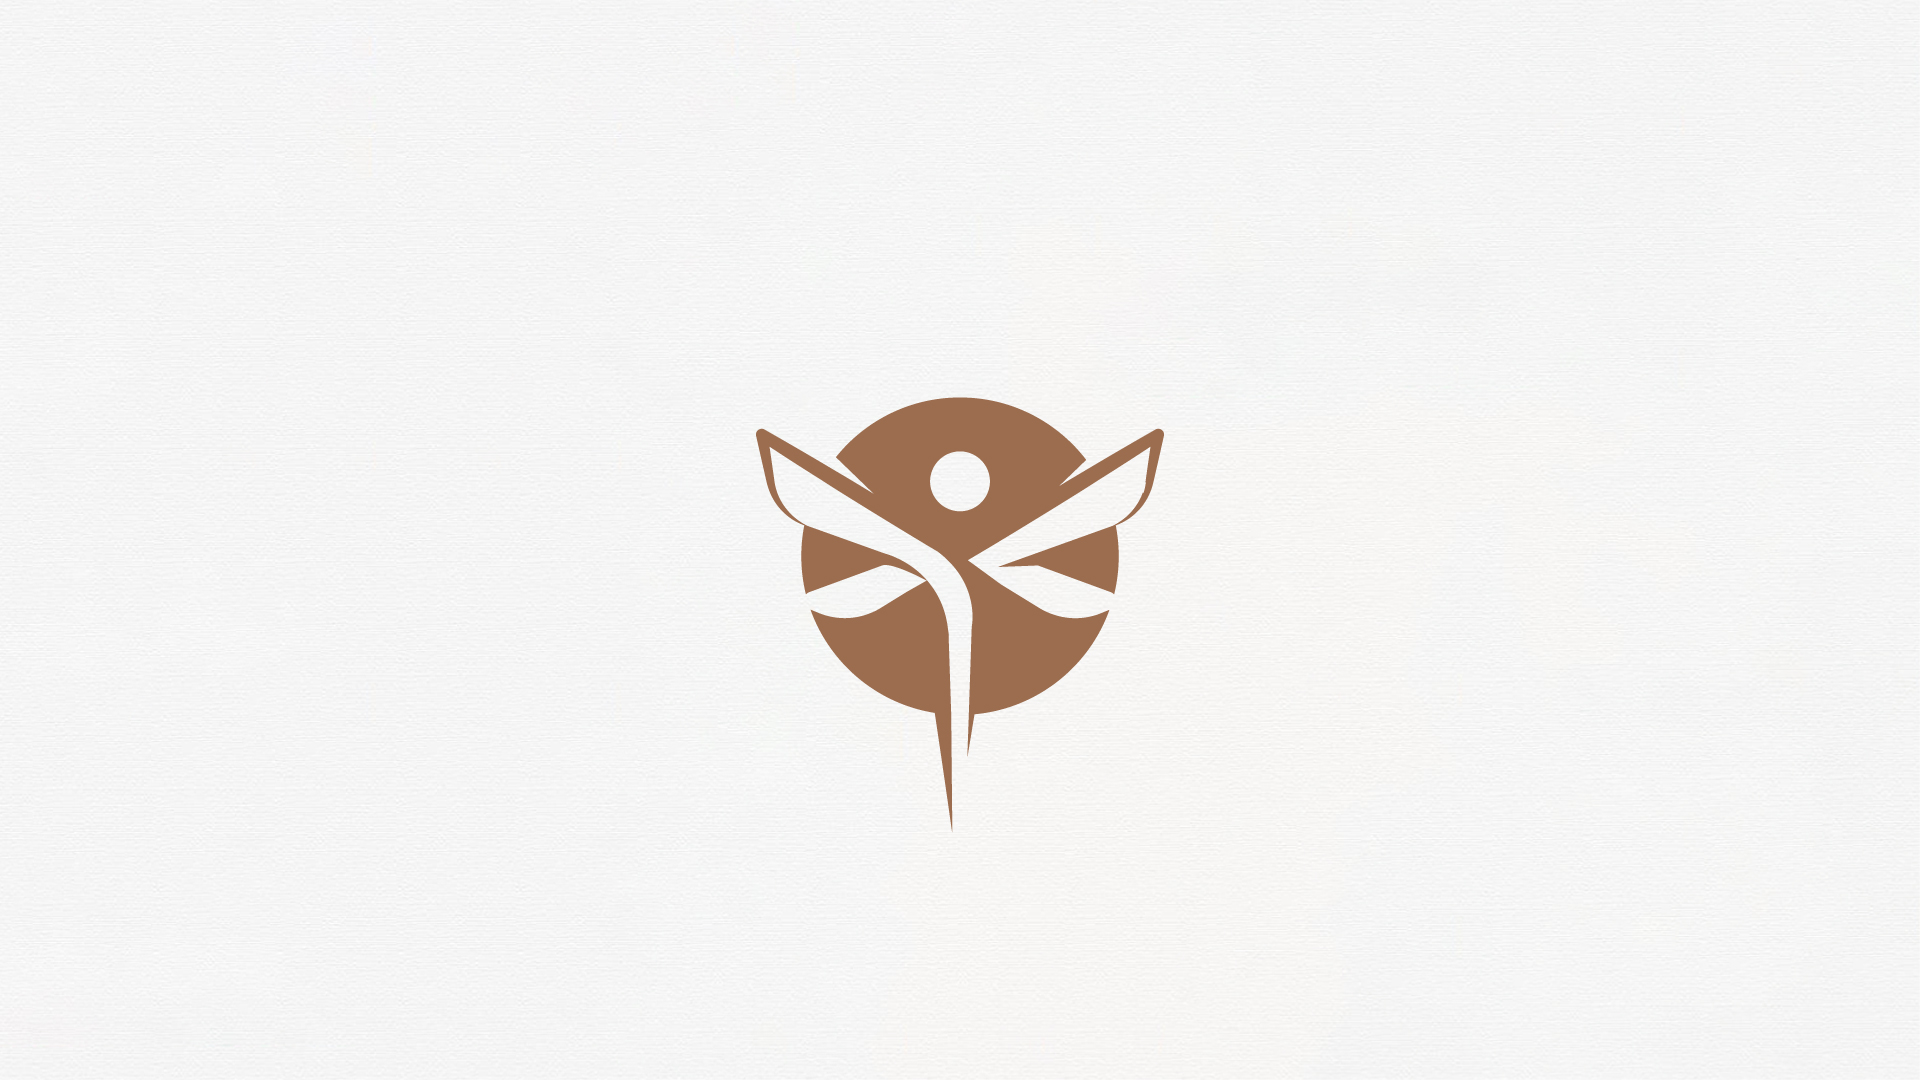 Dragonfly logo design for sale - by DAINOGO